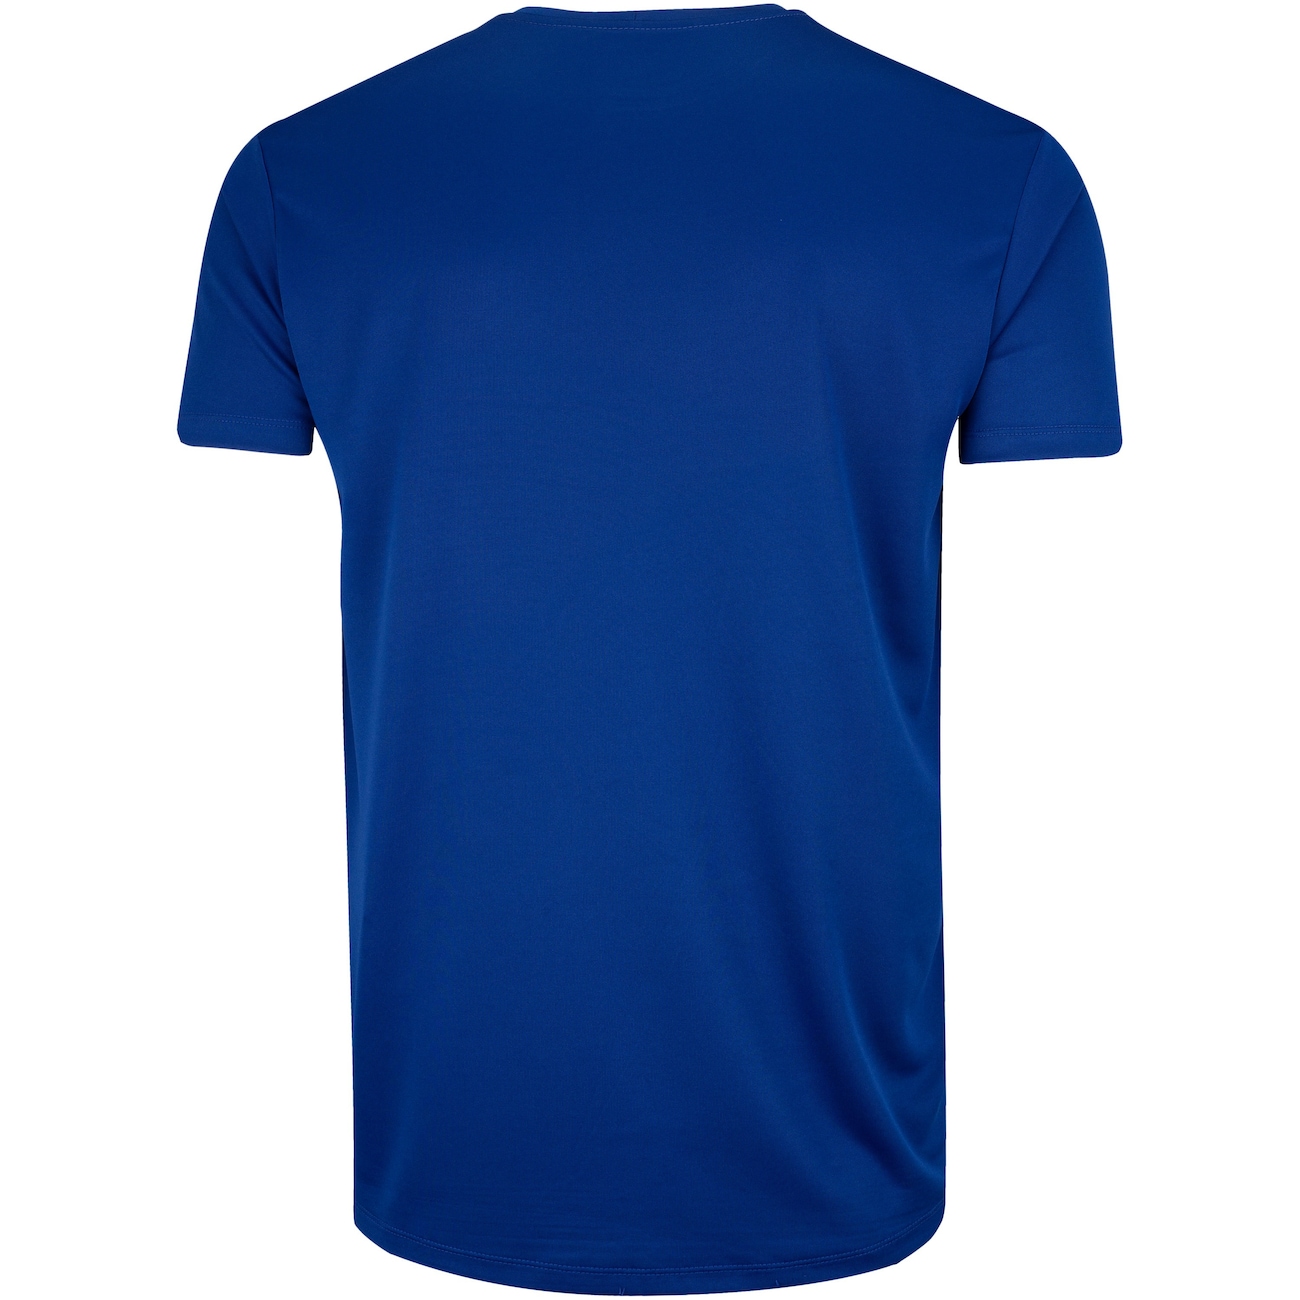 Camiseta Oakley Daily Sport III Masculina - Escorrega o Preço